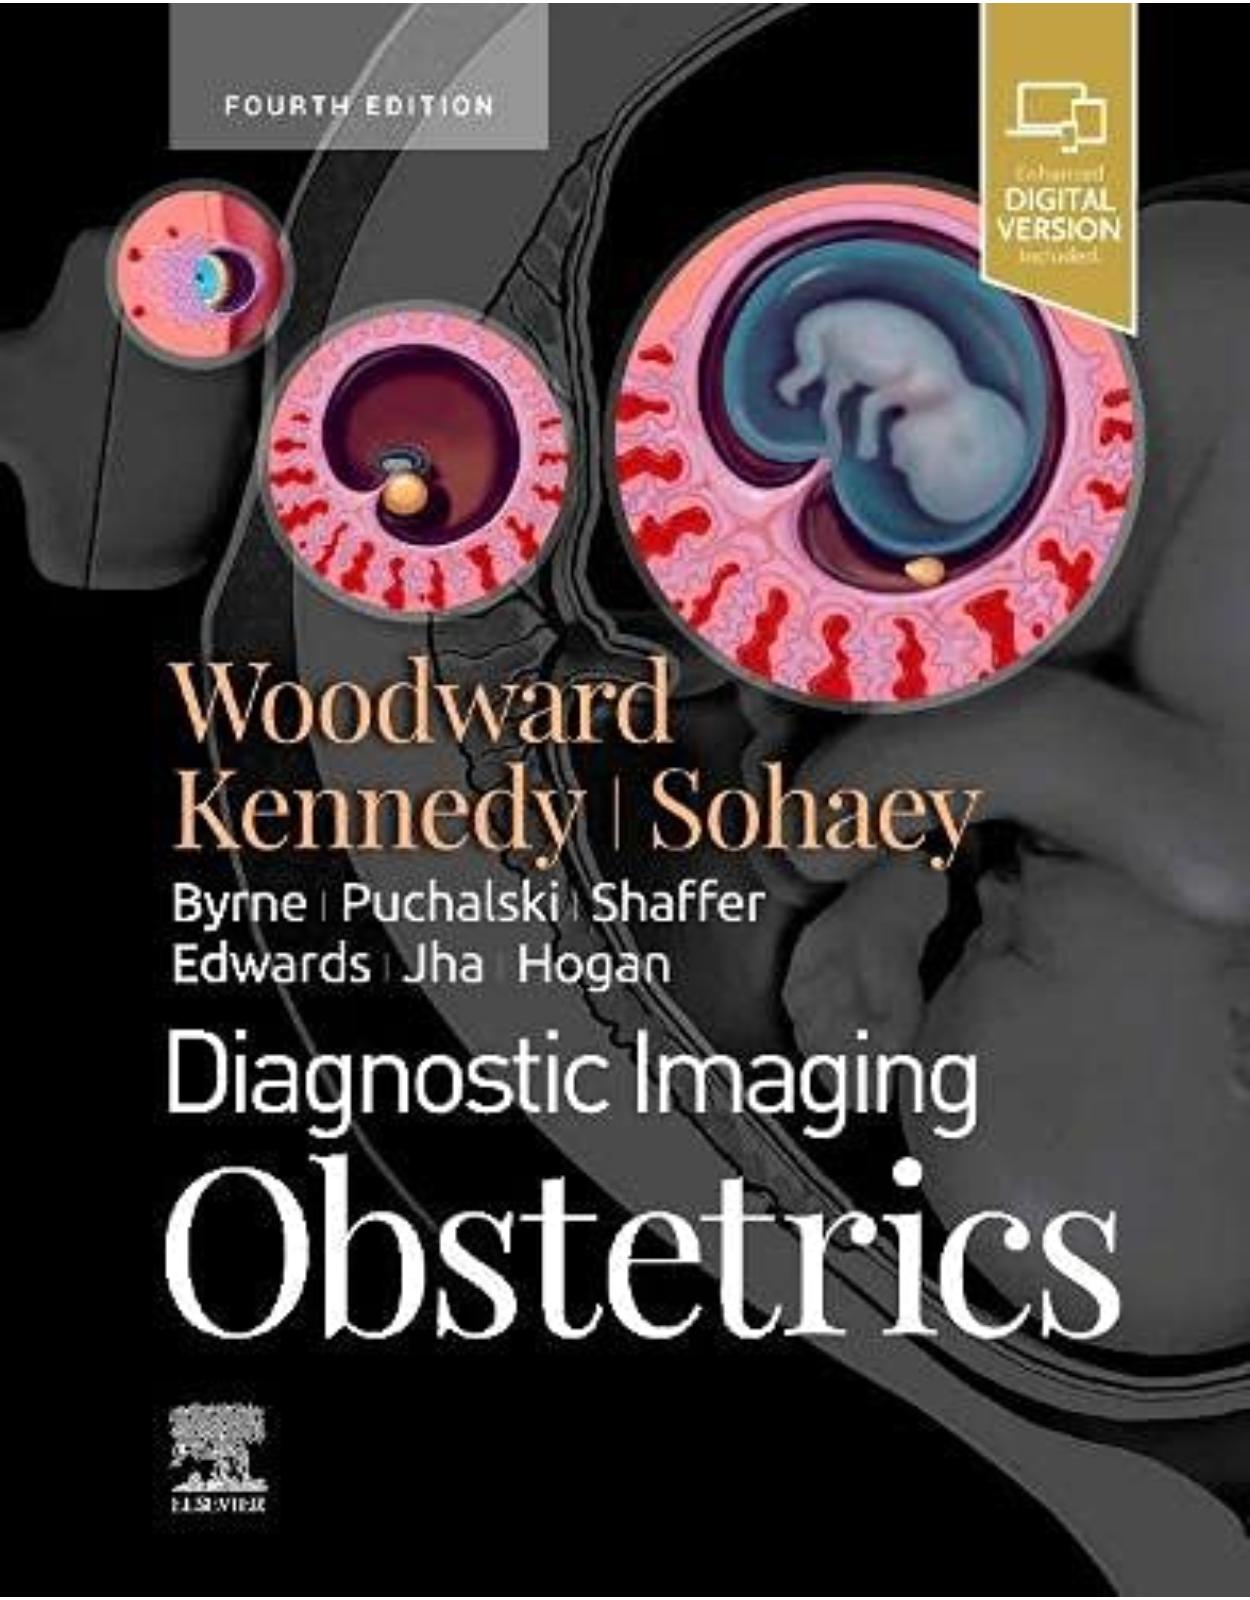 Diagnostic Imaging: Gynecology, 2e